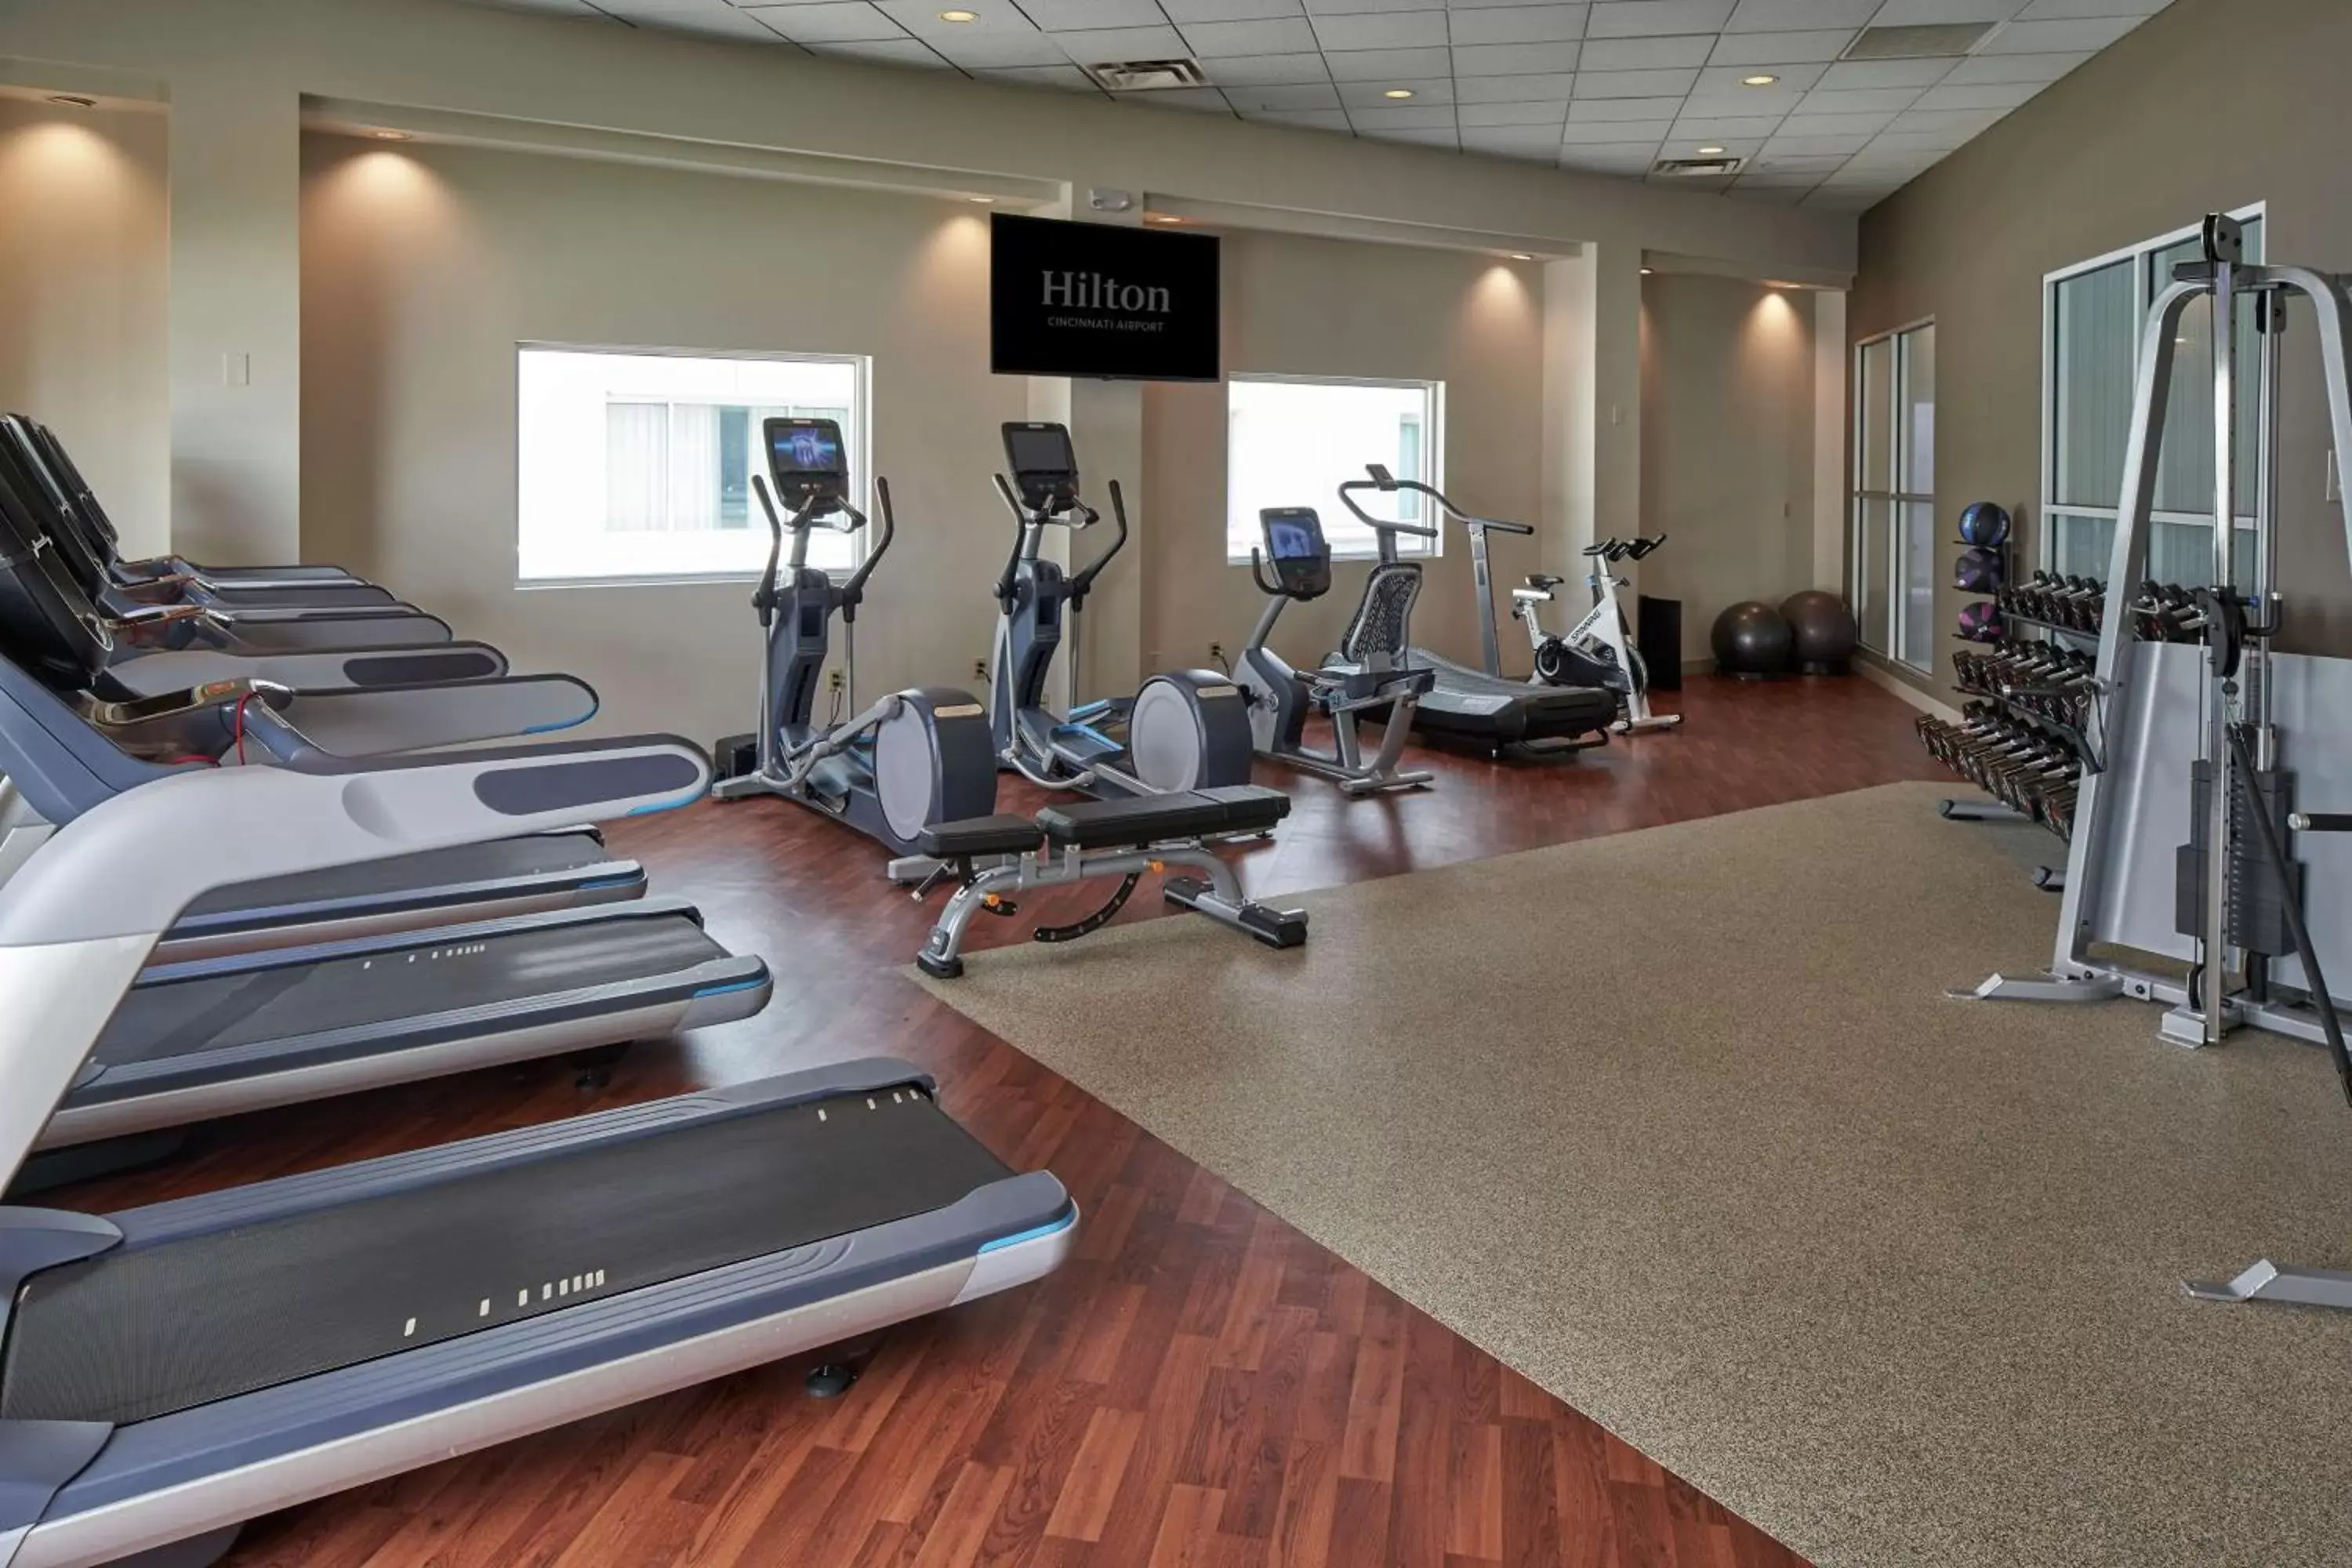 Fitness centre/facilities, Fitness Center/Facilities in Hilton Cincinnati Airport